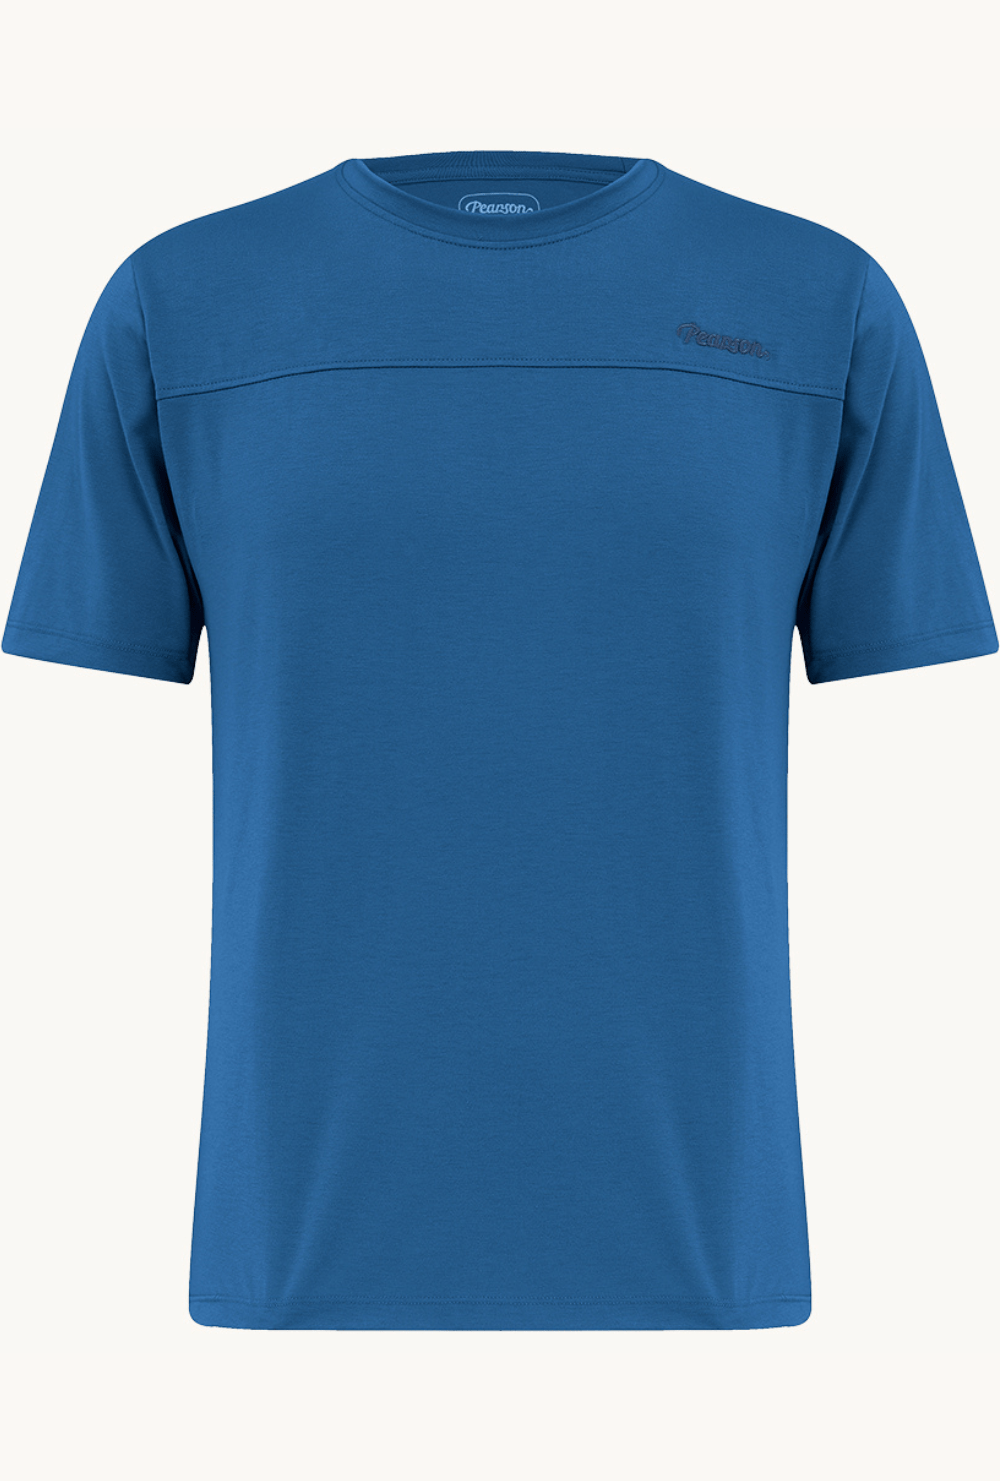 Pearson 1860  High DaysandHolidays - Cycling T-shirt Mid Blue  Mid Blue / Xx-large